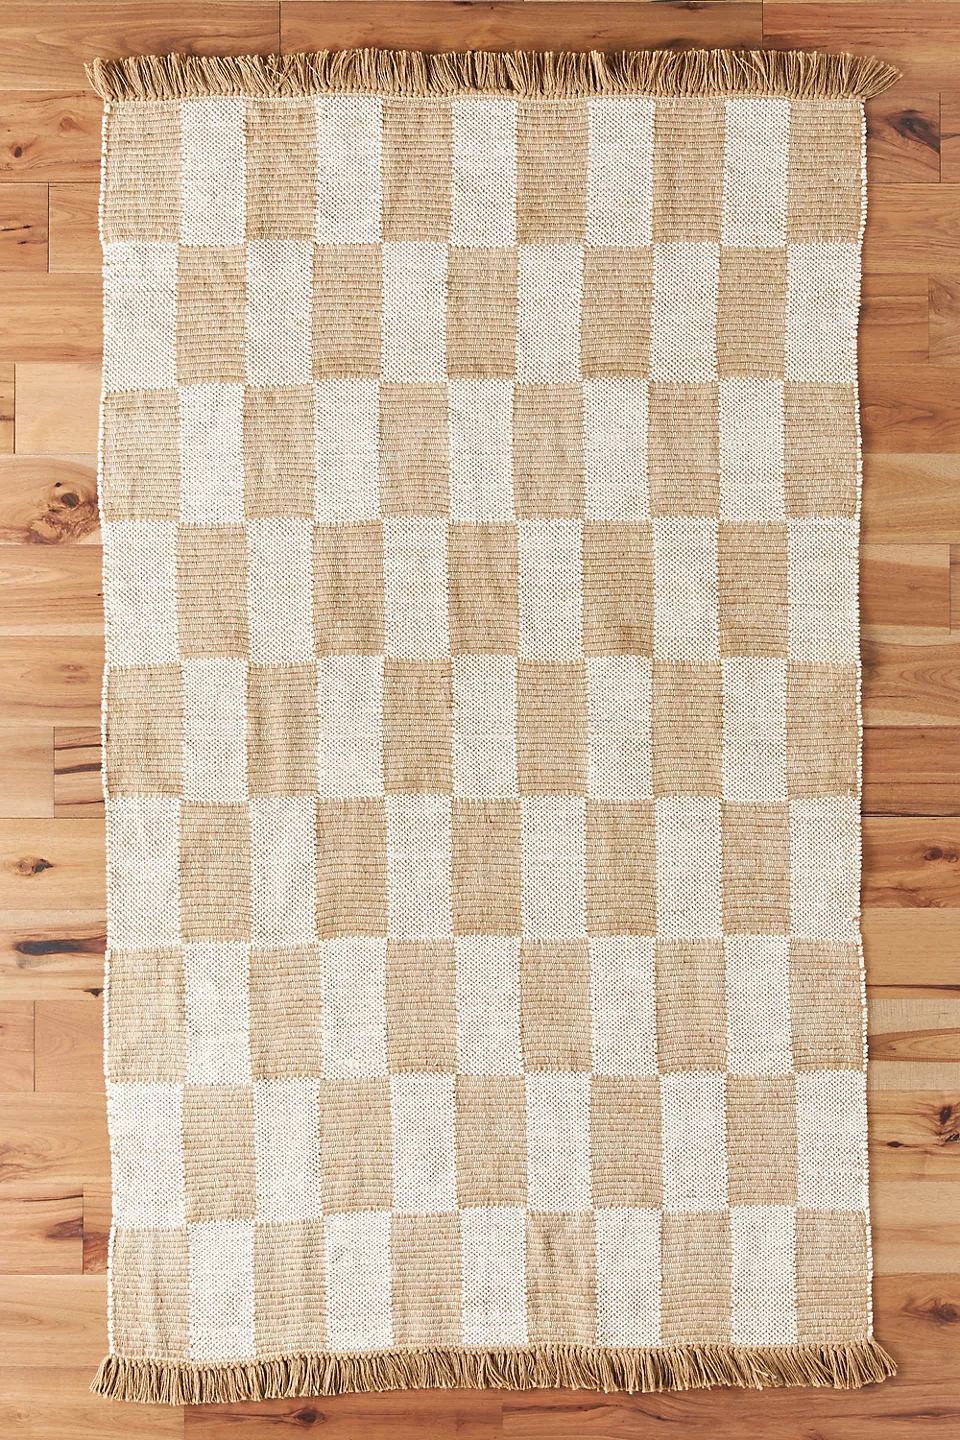 Checkerboard jute rug, Amber Lewis/Loloi, Anthropologie. #checkerboardrug